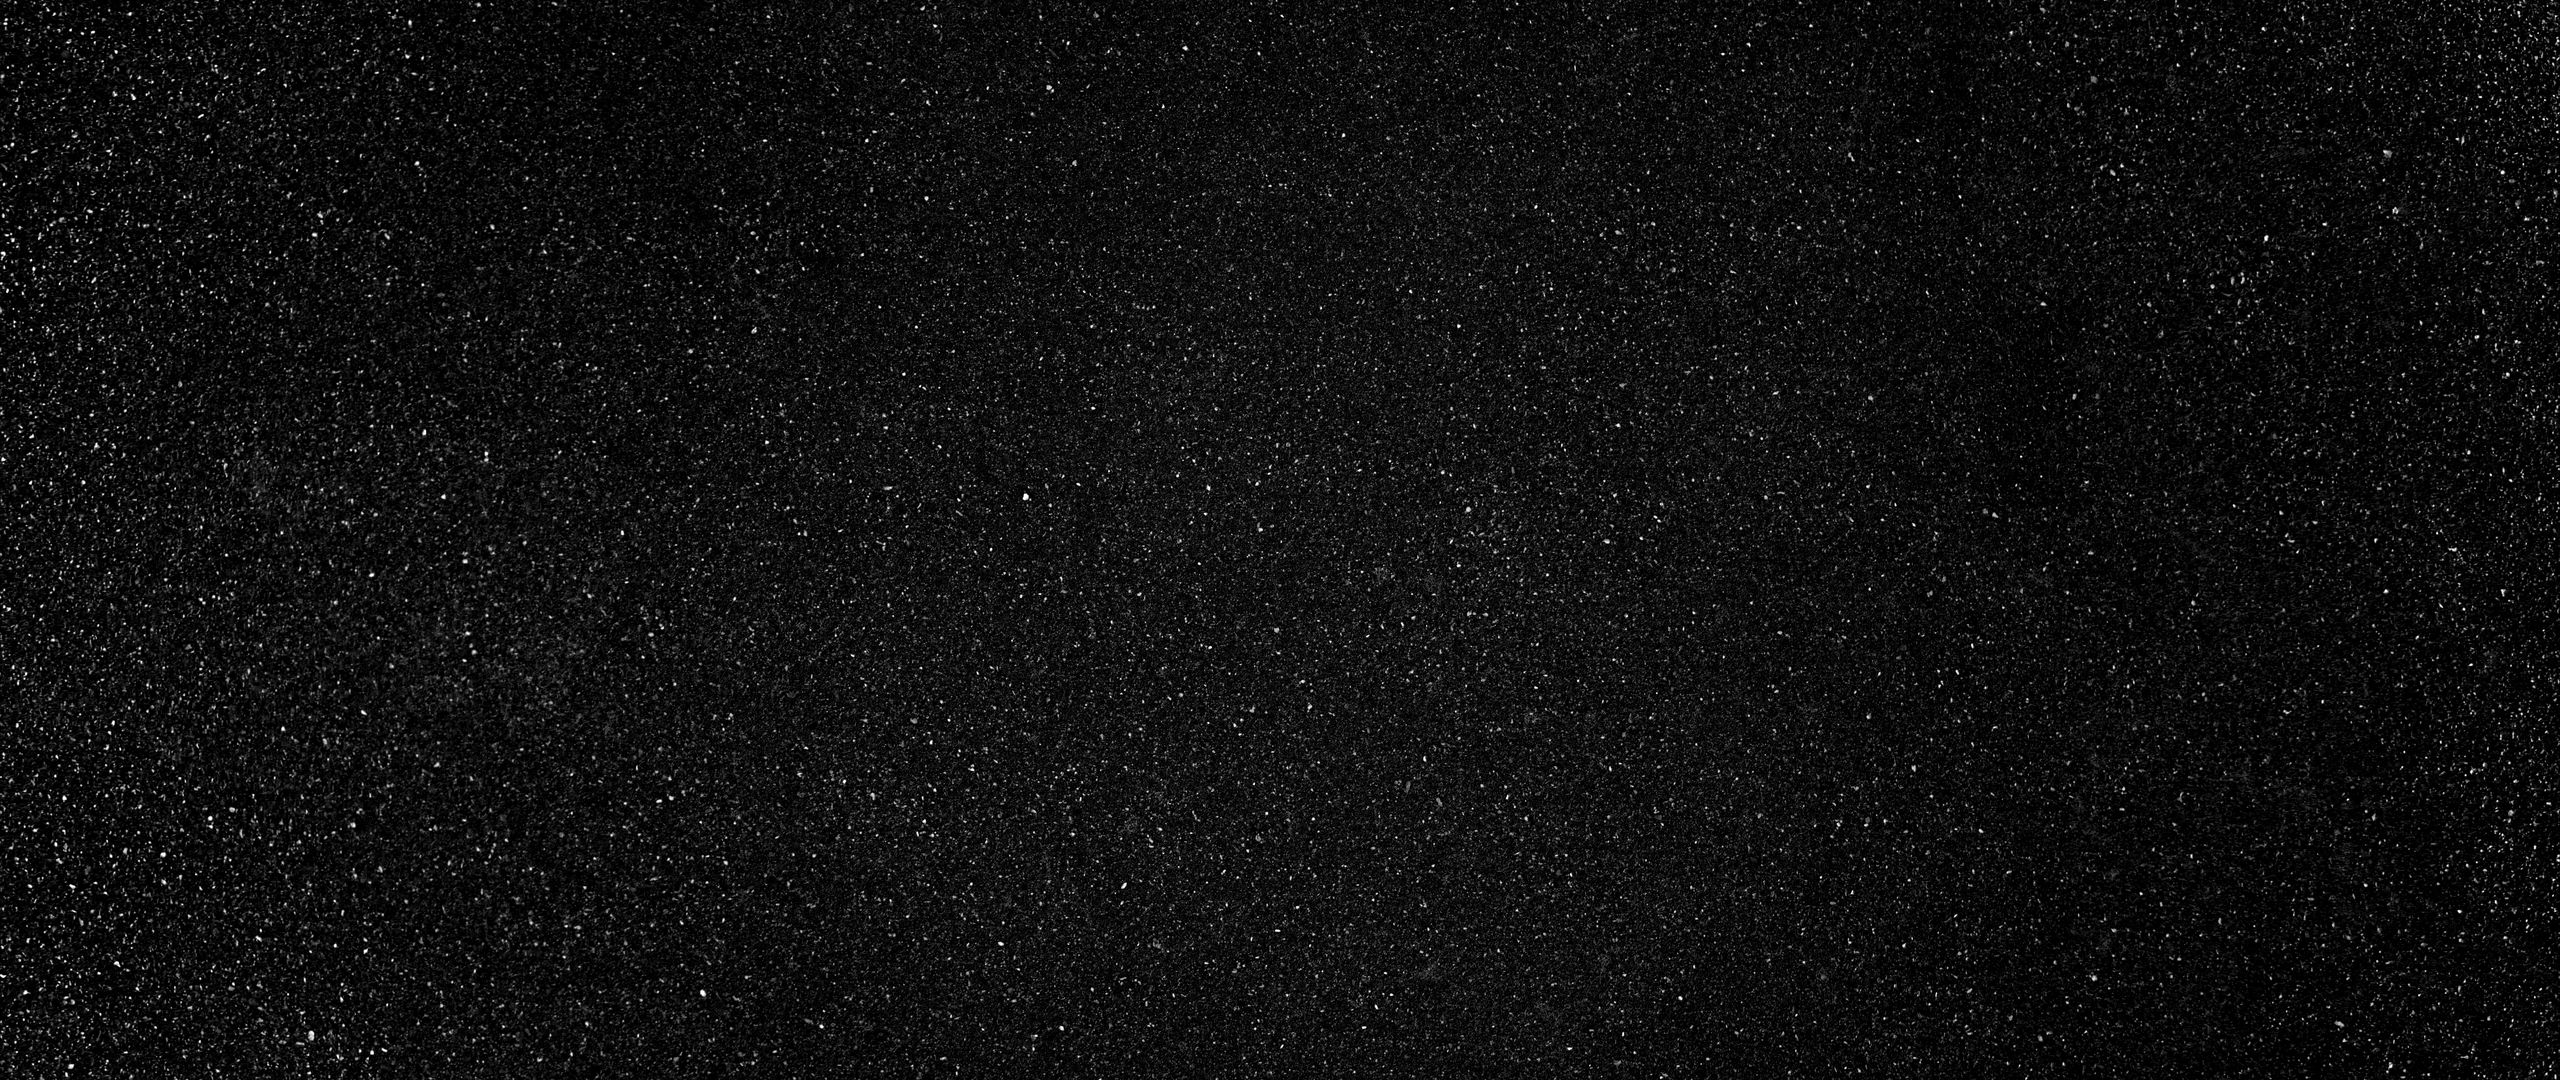 Dark Starry Night Scenery Digital Art HD 4K Wallpaper 8249